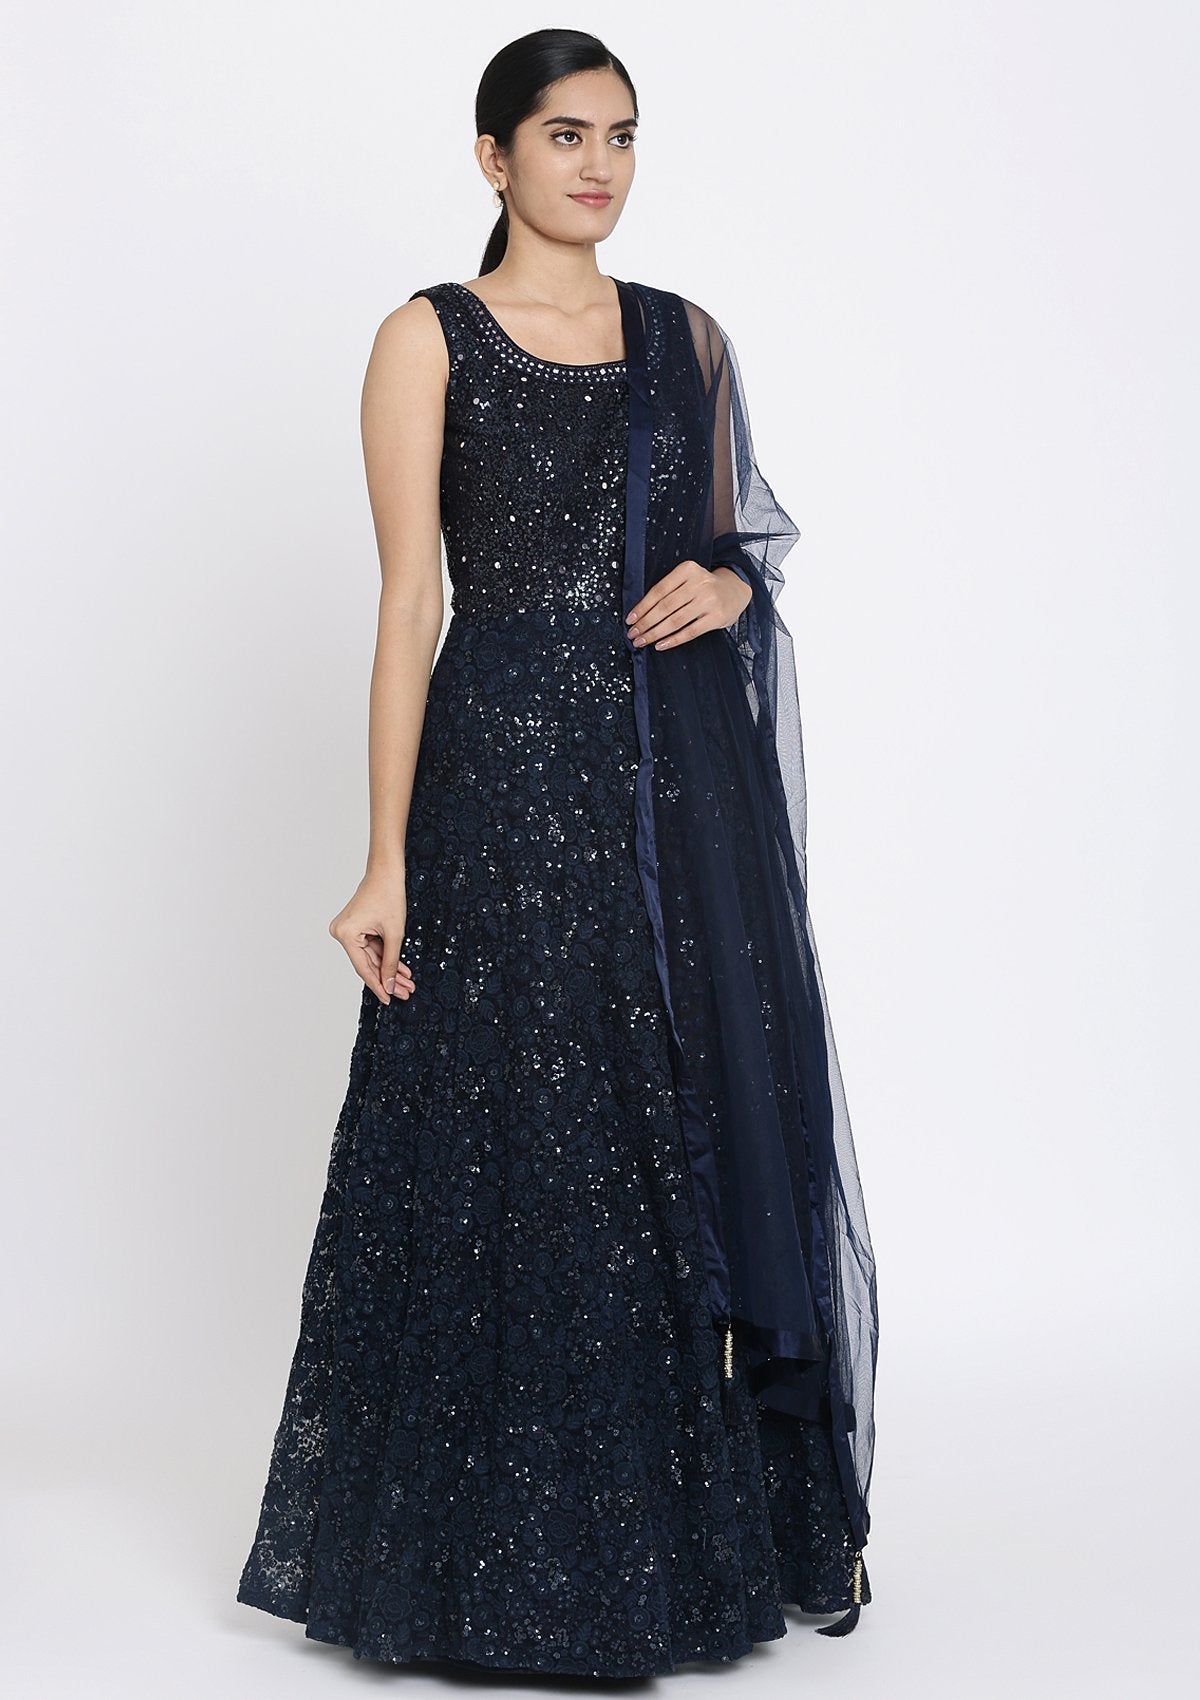 Navy Blue Chikankari Net Designer Gown - koskii